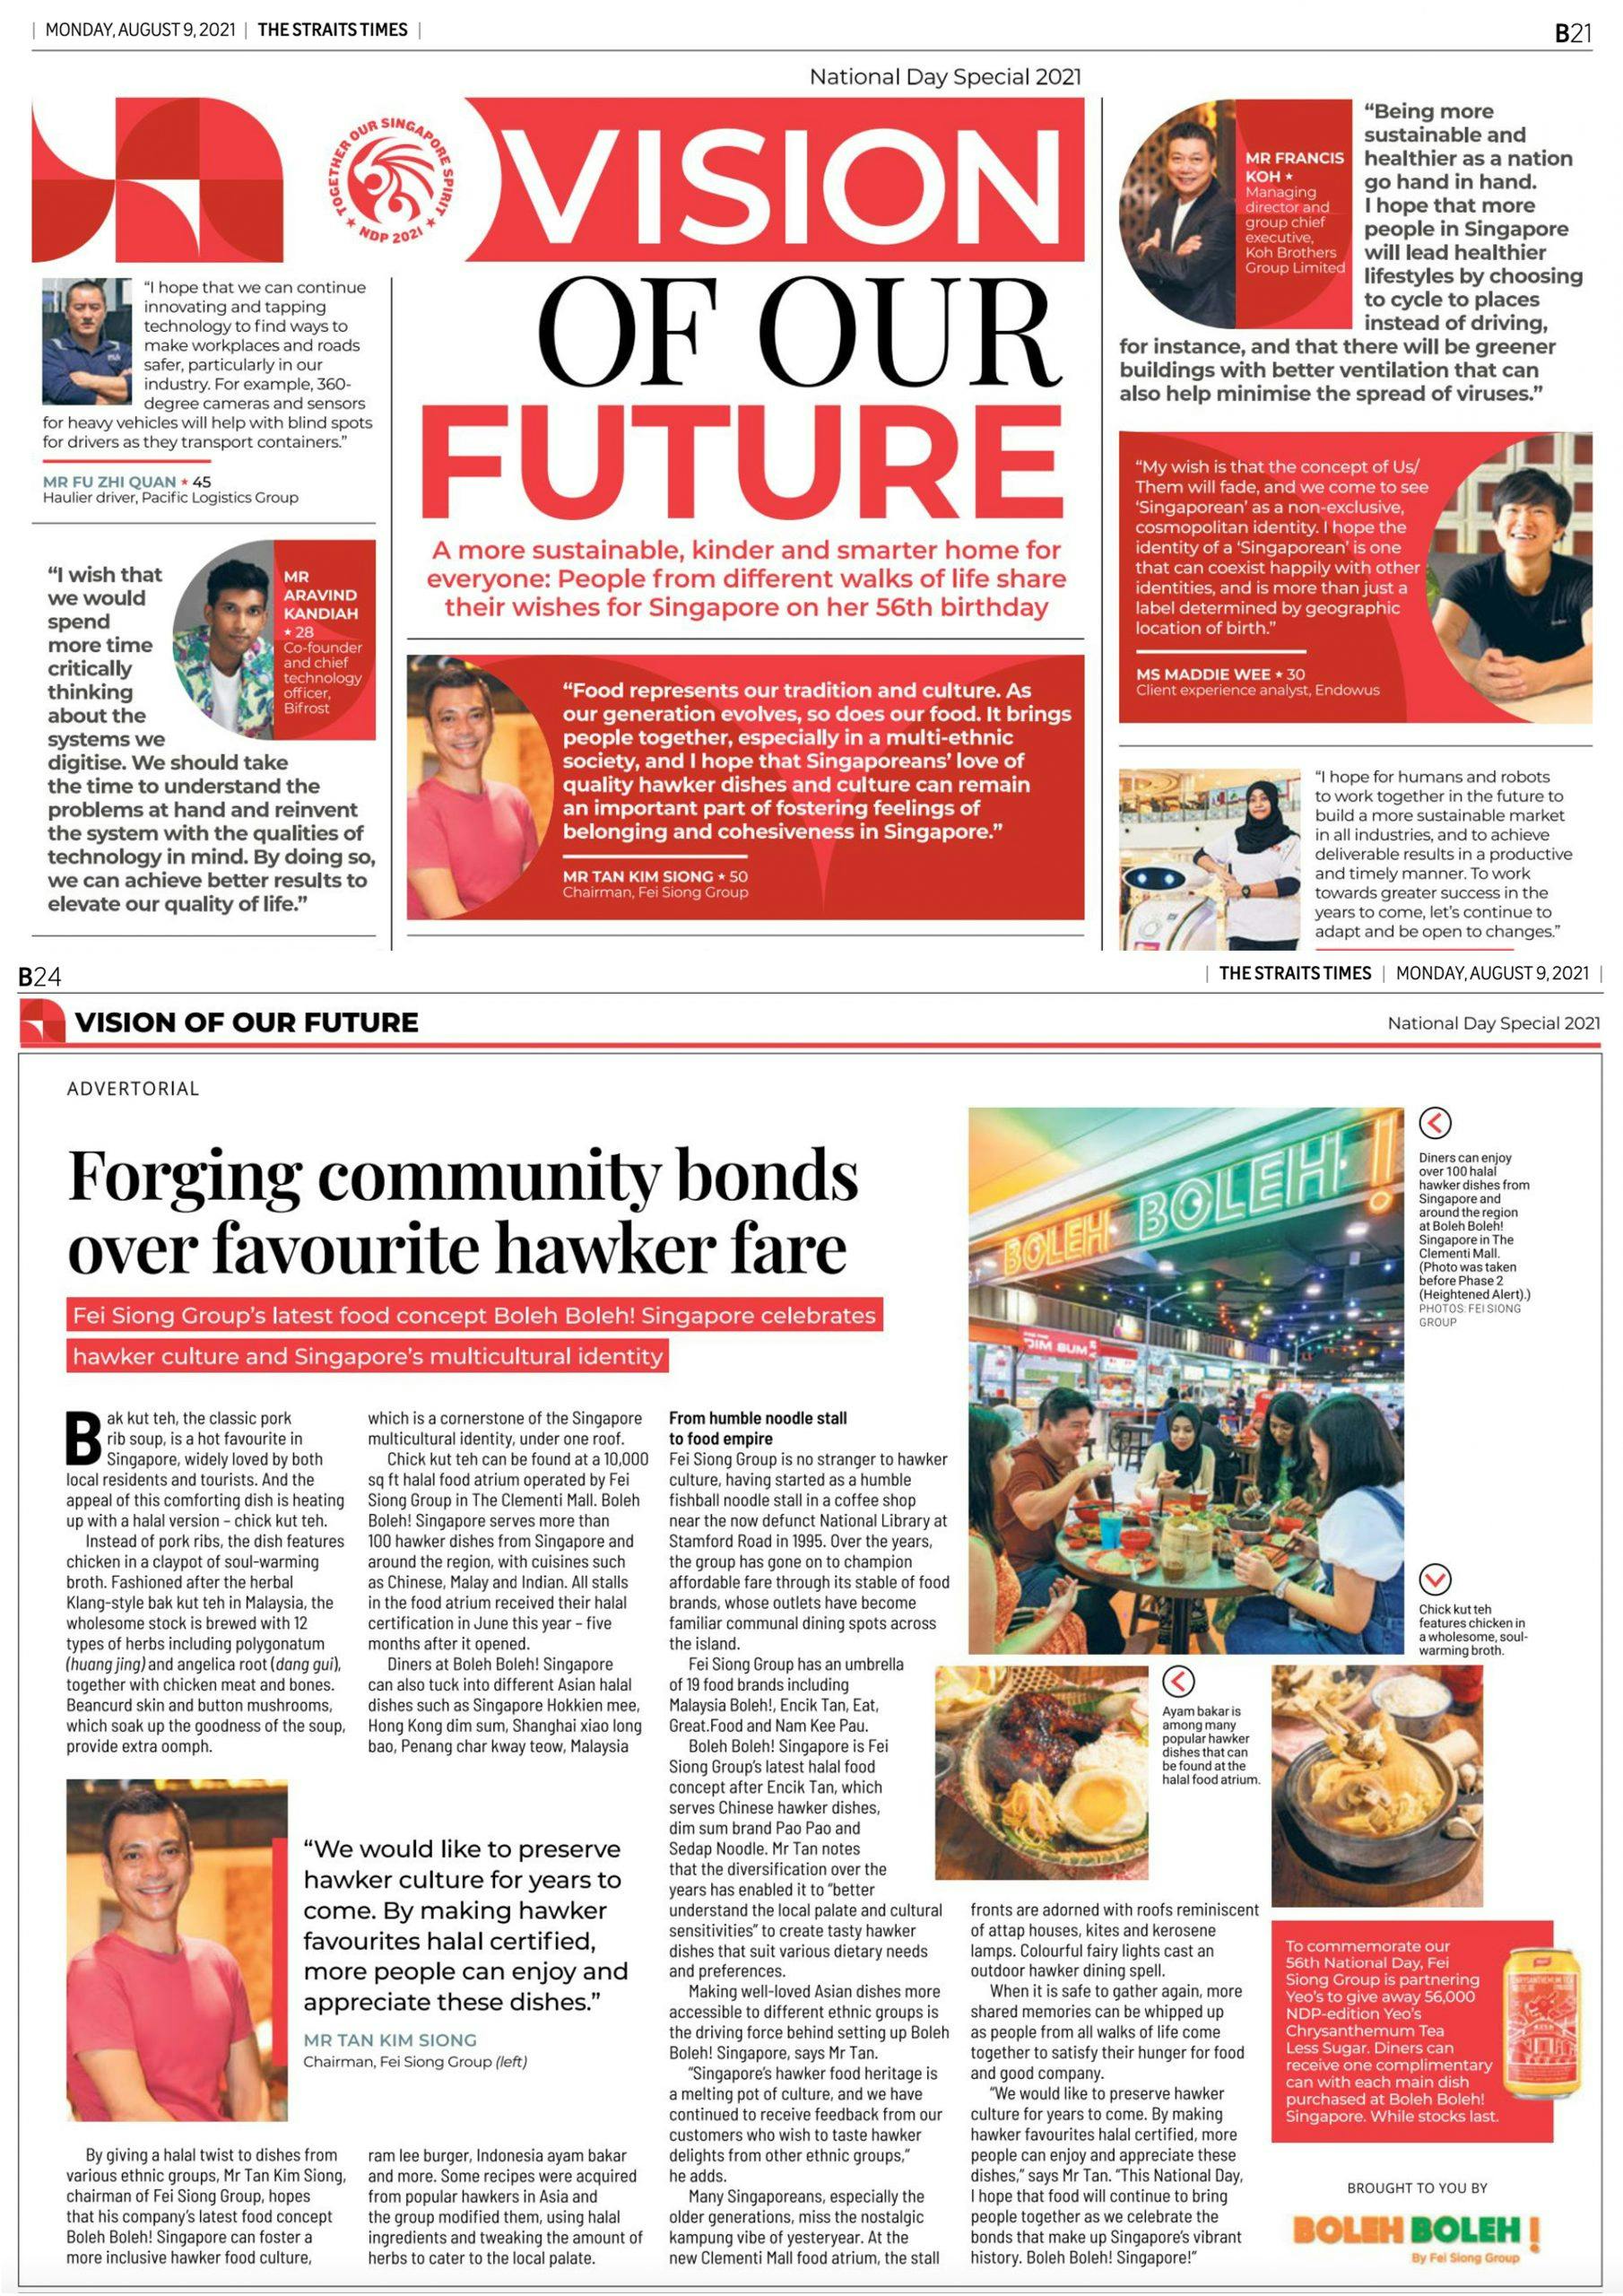 The Straits Times - Forging community bonds over favourite hawker fare